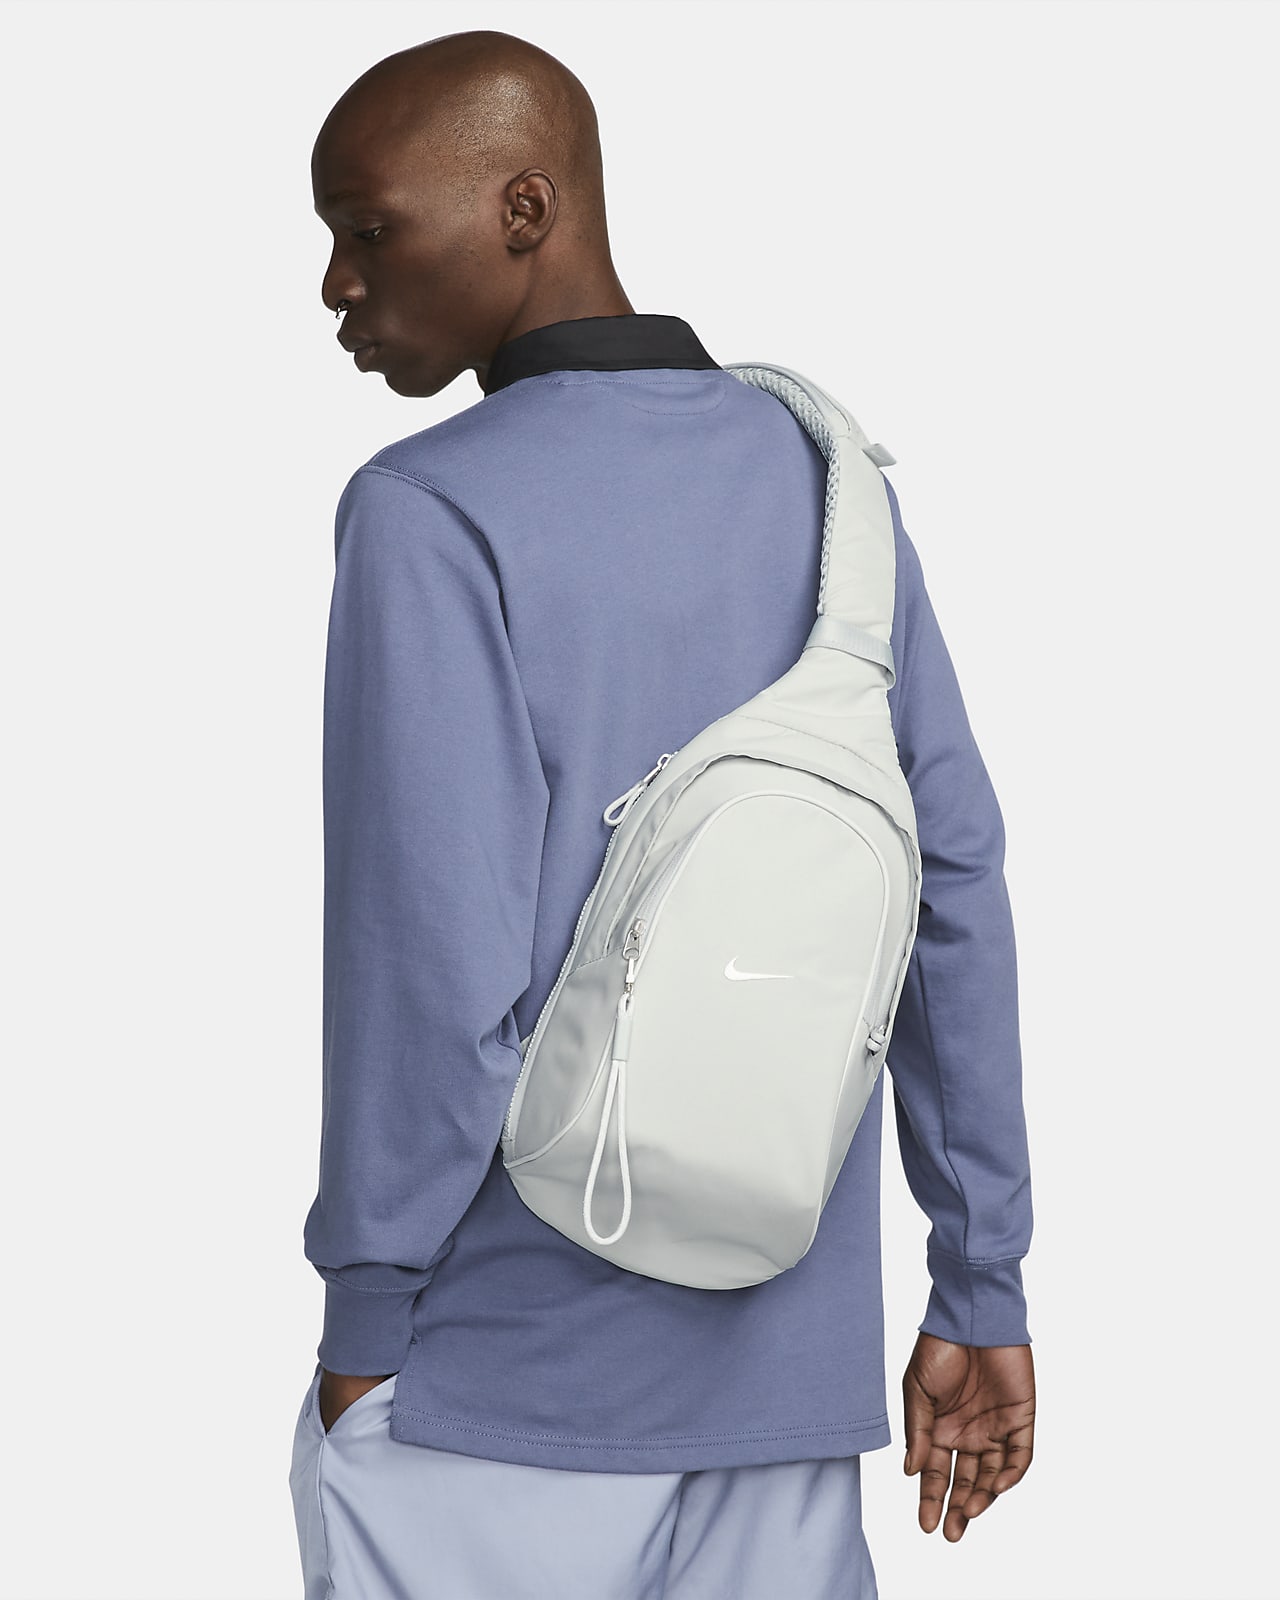 Explore more than 102 sling bag best